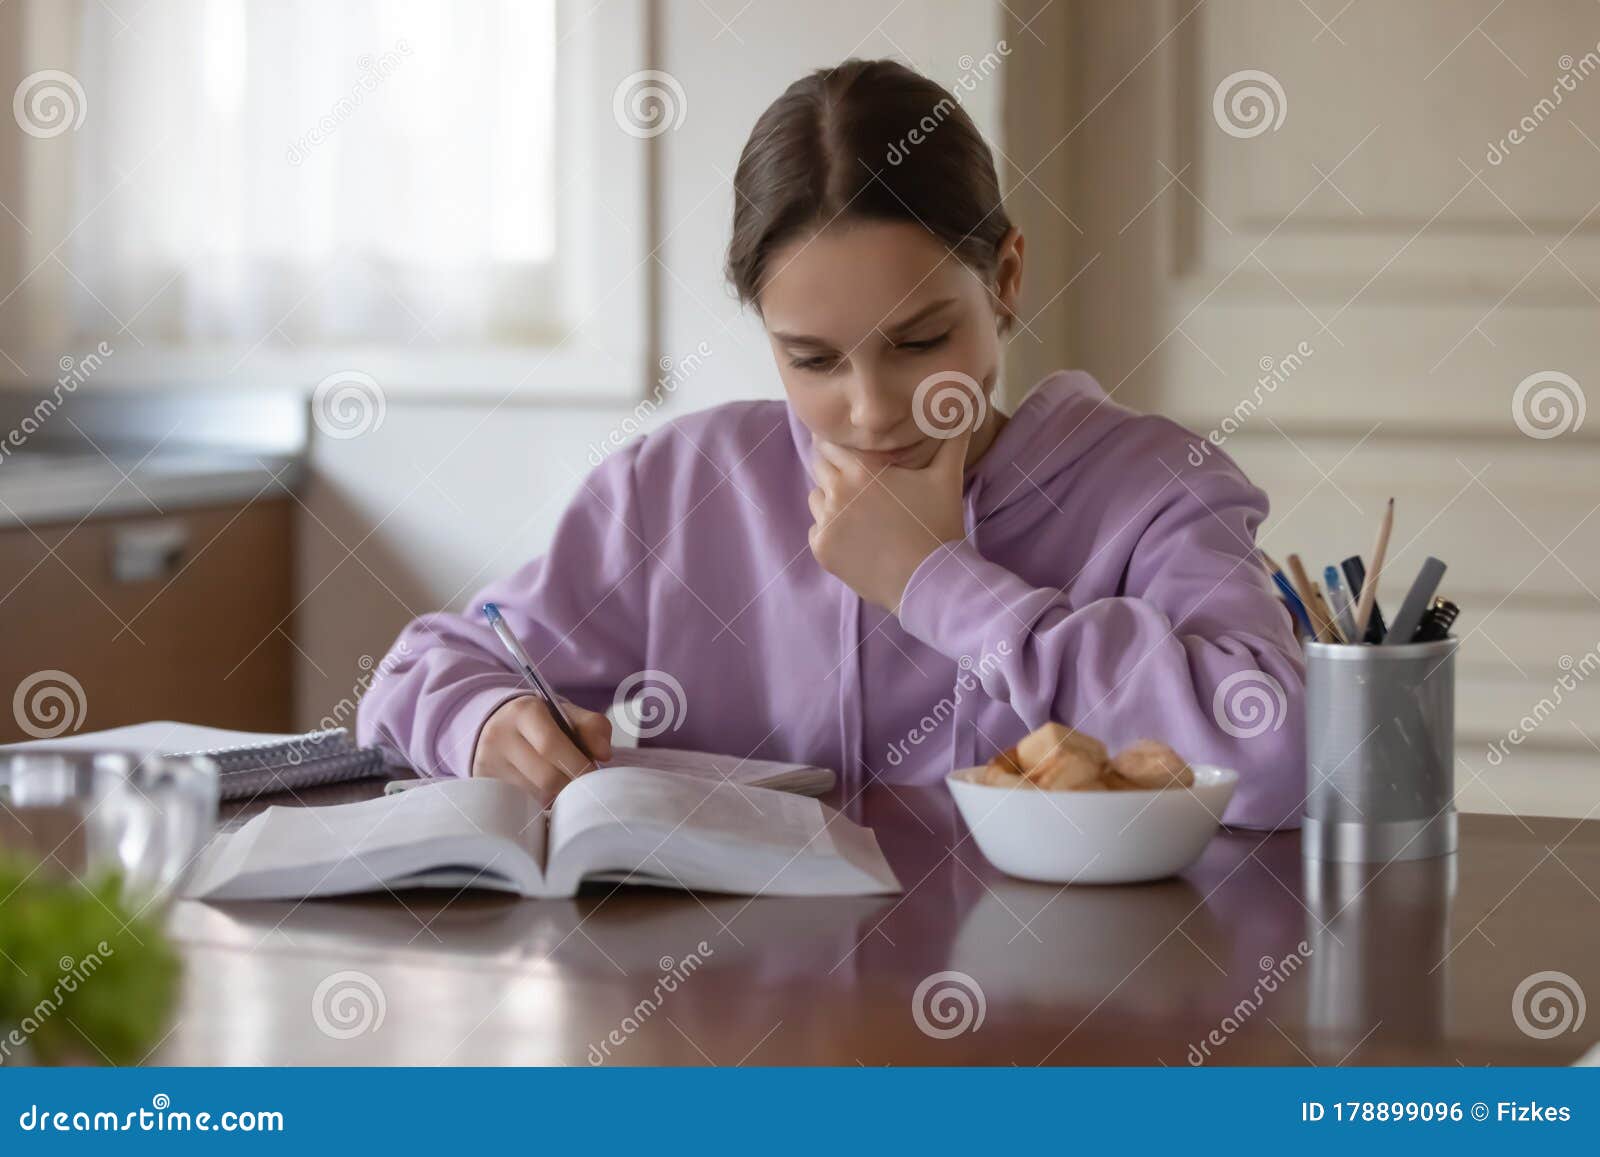 Child doing her homework stock photo. Image of thirsty 